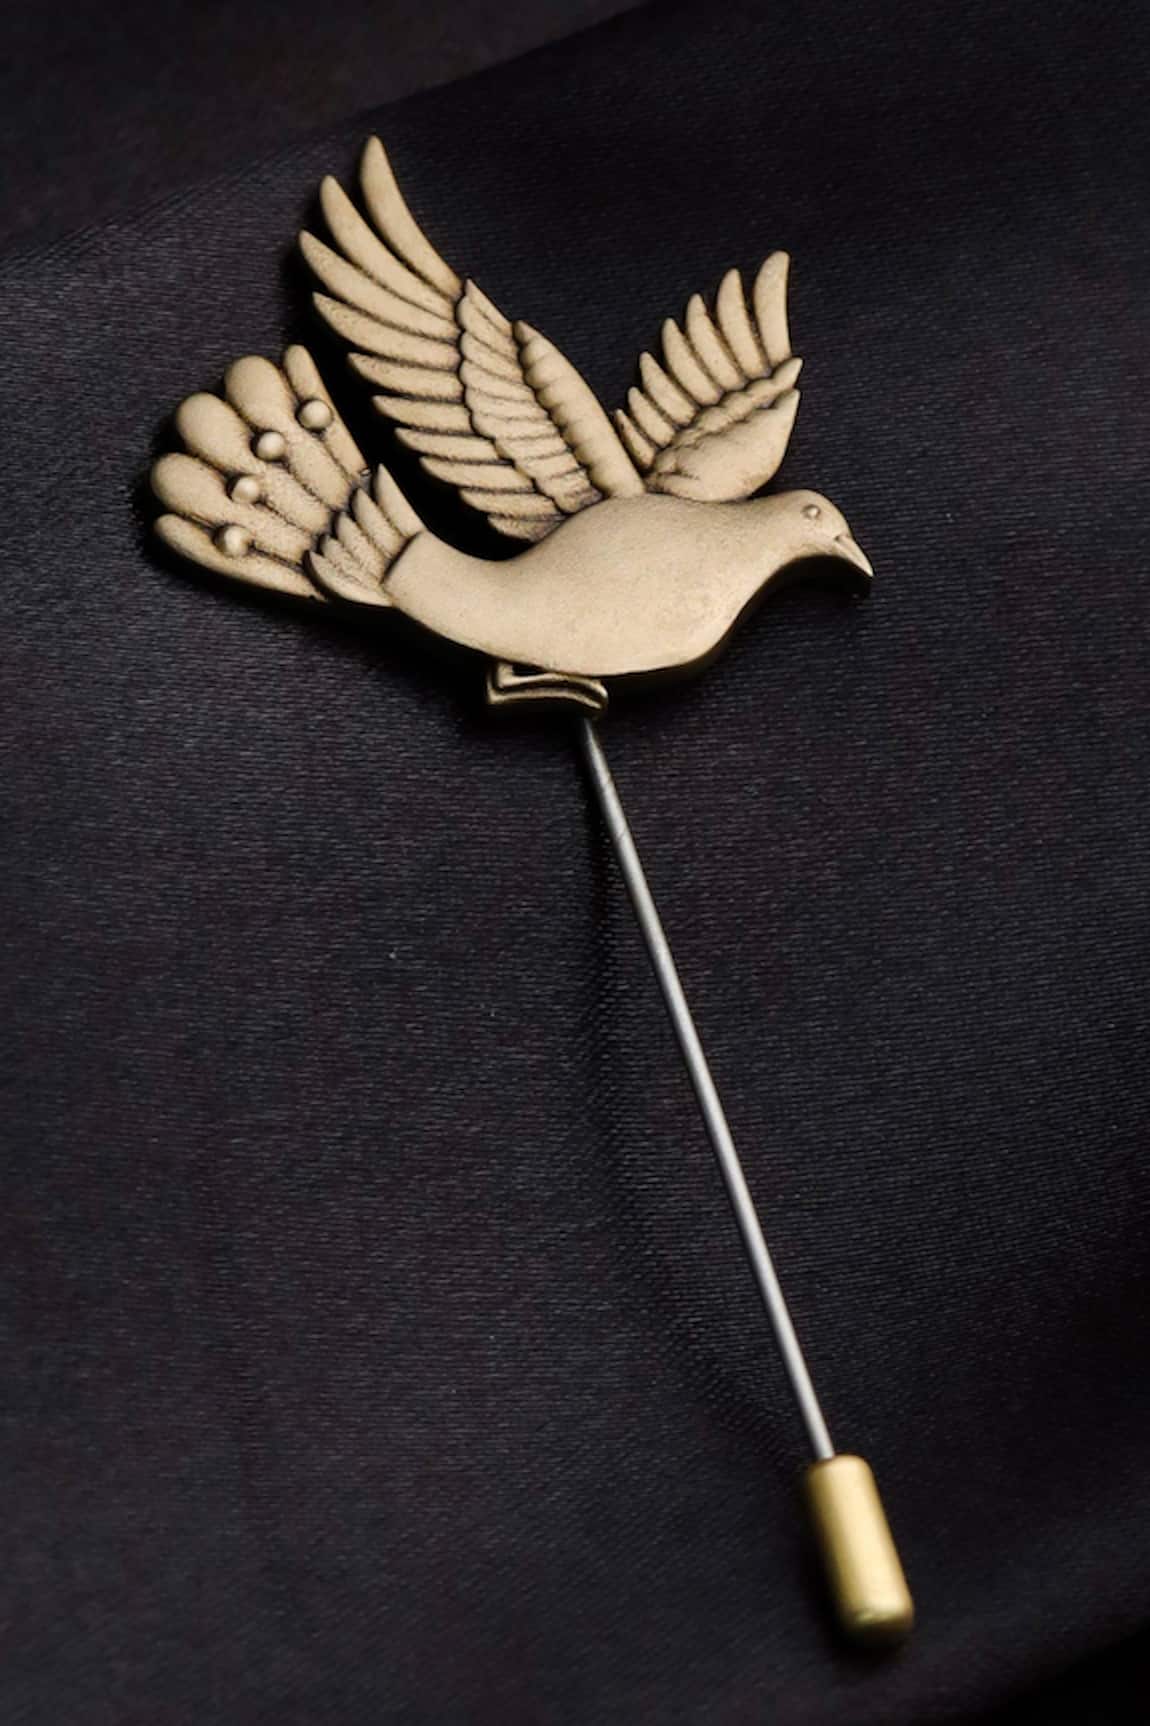 Cosa Nostraa Flying Bird Lapel Pin